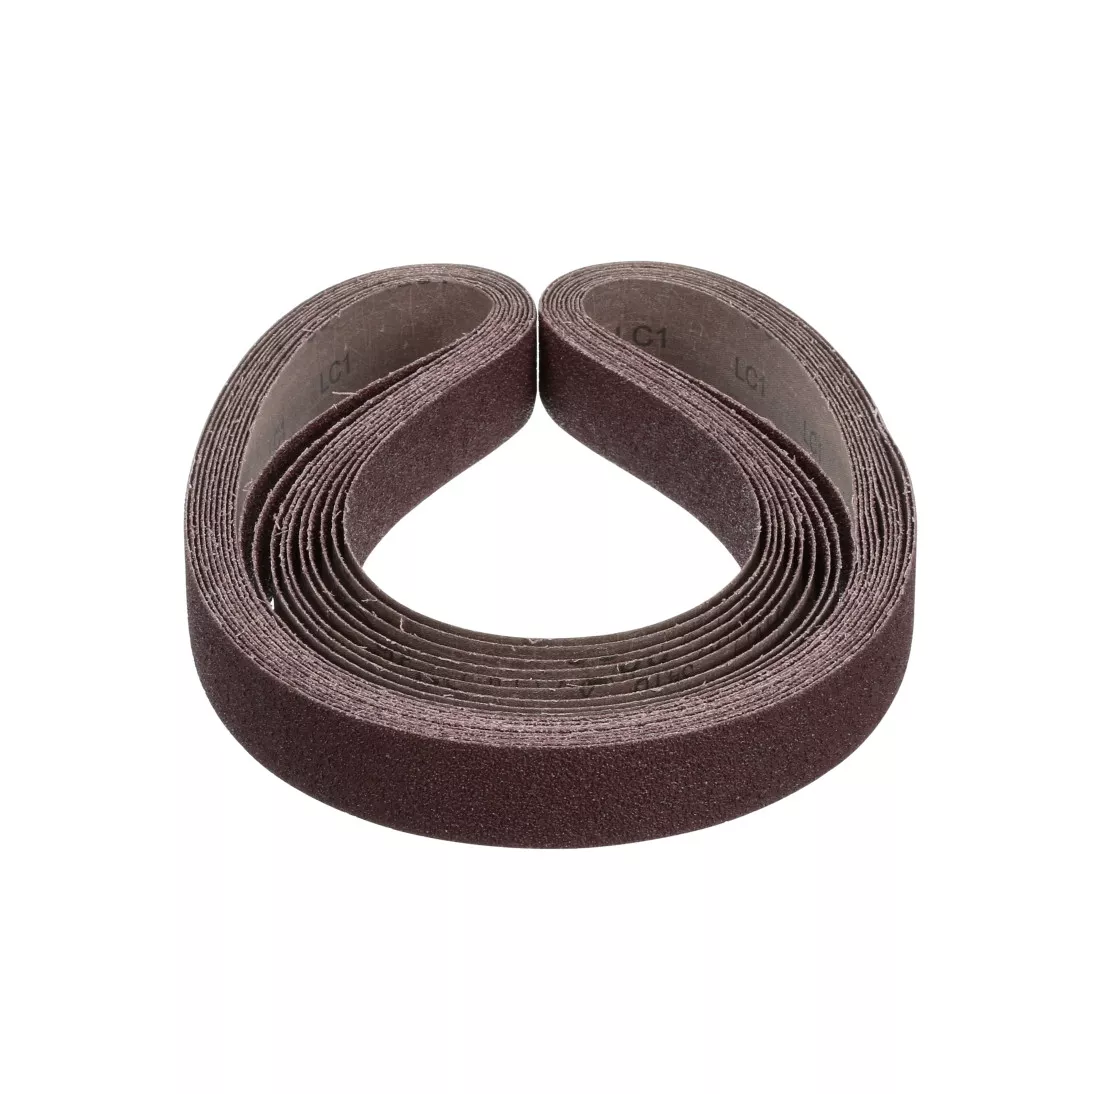 3M™ Cloth Belt 341D, P100 X-weight, 1 in x 42 in, Film-lok, Single-flex,
200 ea/Case